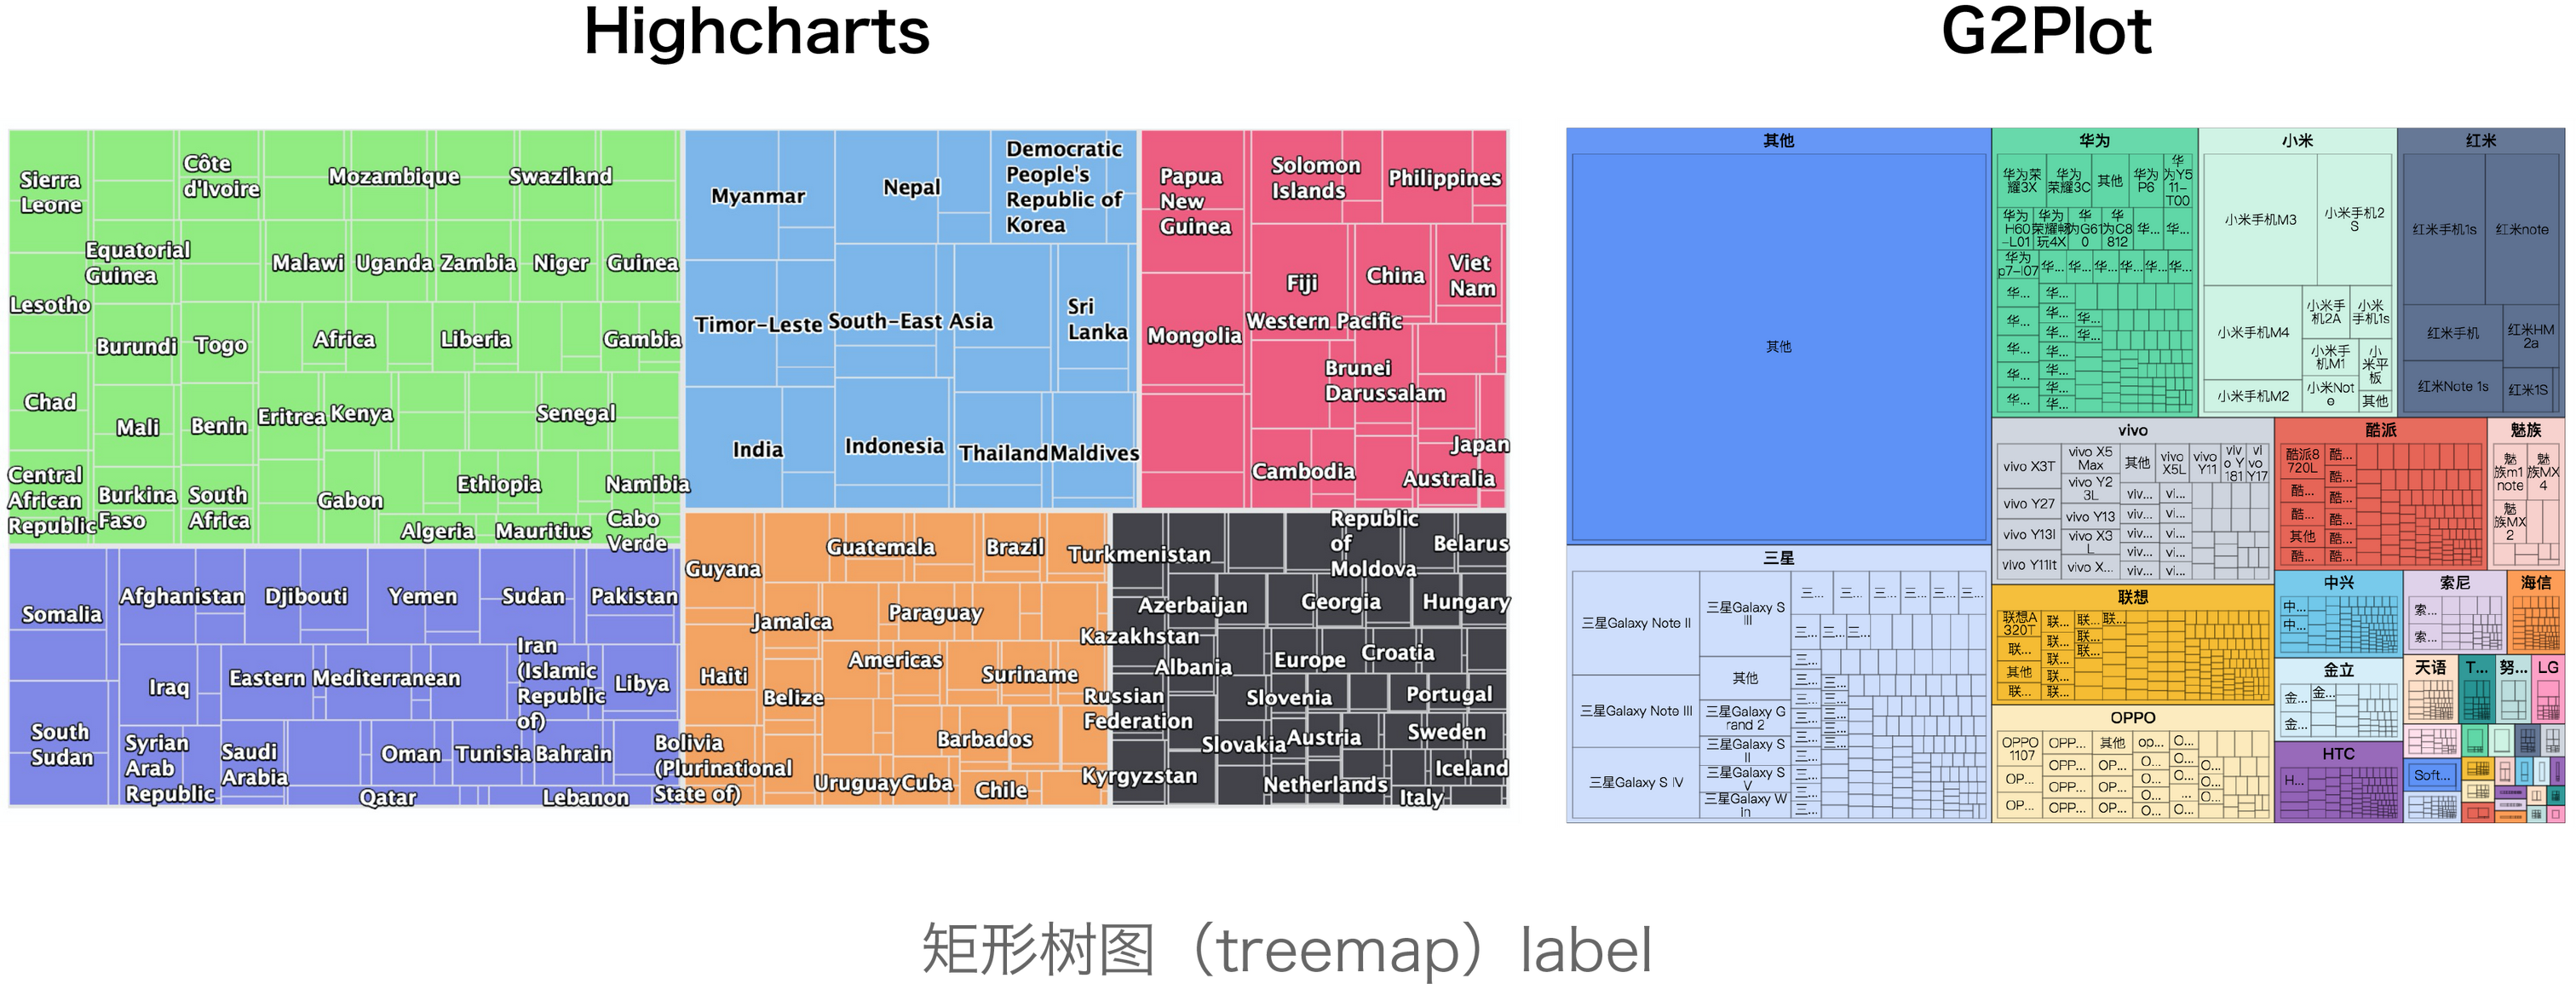 treemap-label.png